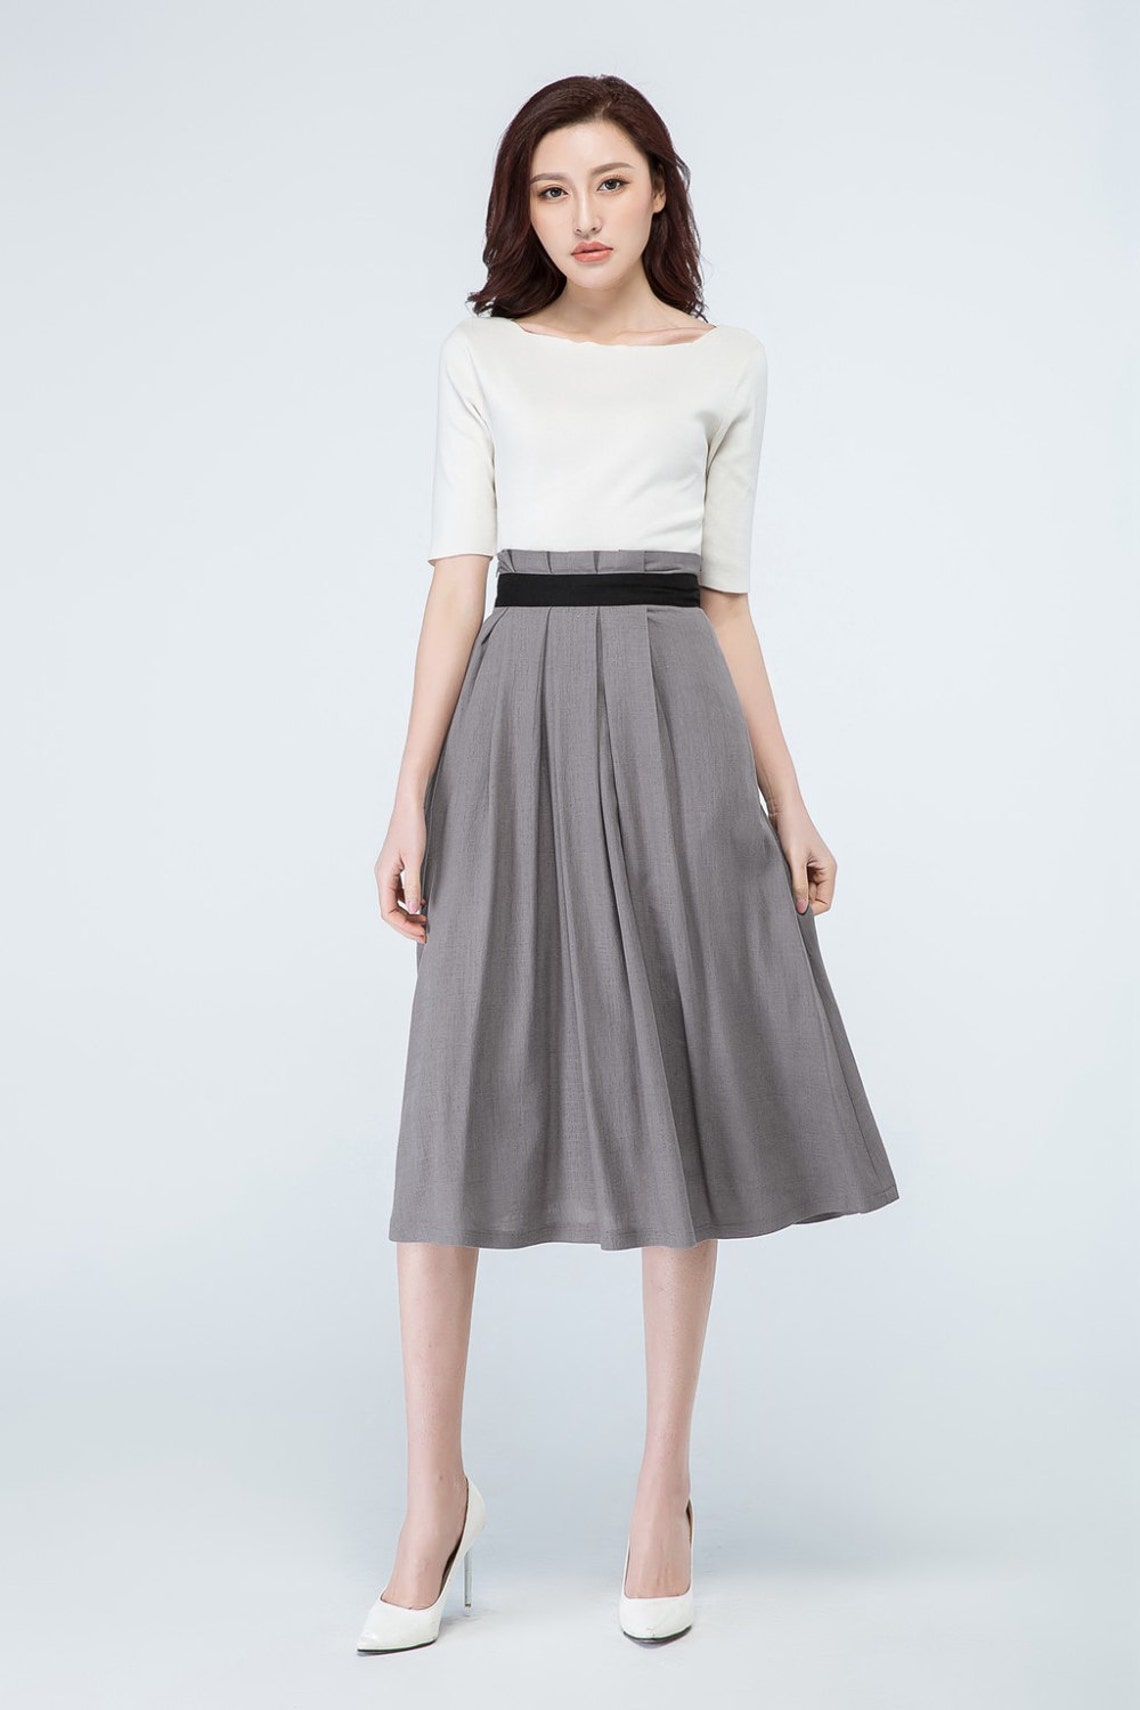 High waist pleated midi skirt A Line skirt flared skirt | Etsy